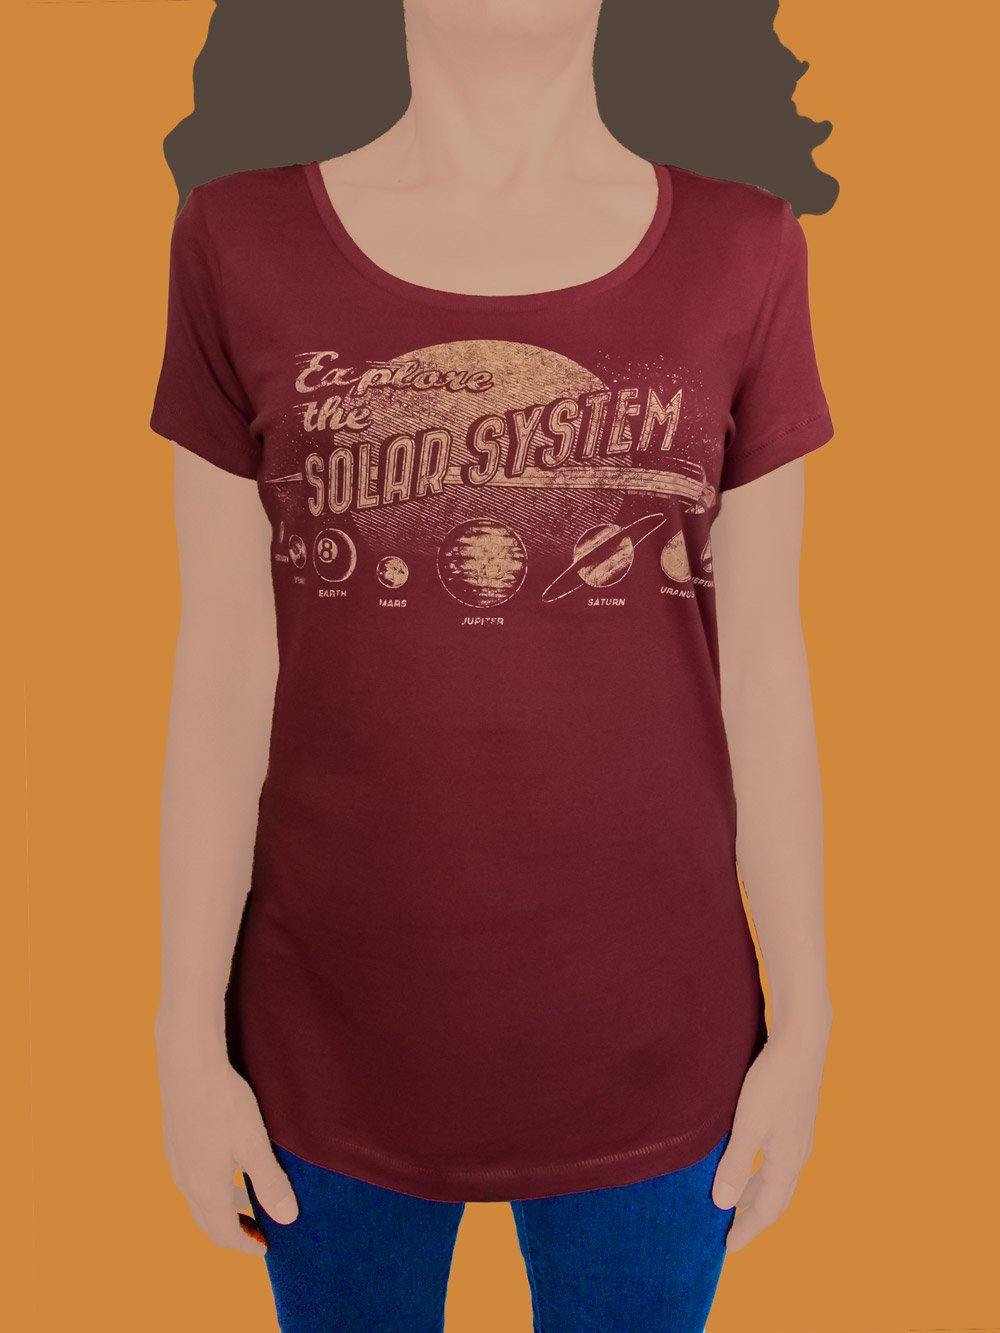 Explore the Solar System t-shirt hand printed organic cotton t-shirt